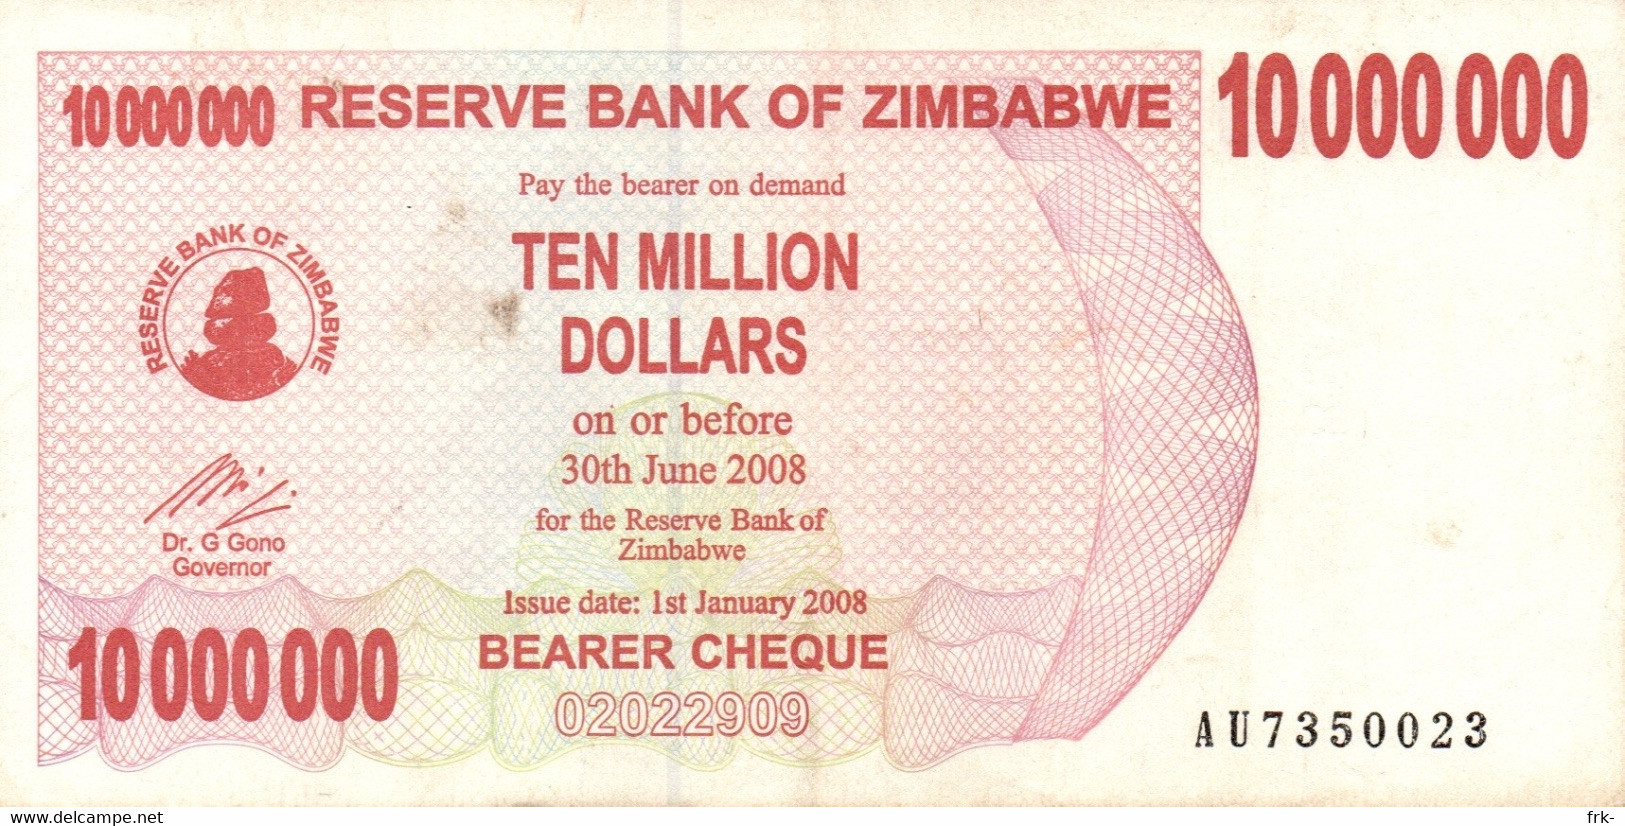 ZIMBABWE 10000000 DOLLARS CIRCULATED - Macao